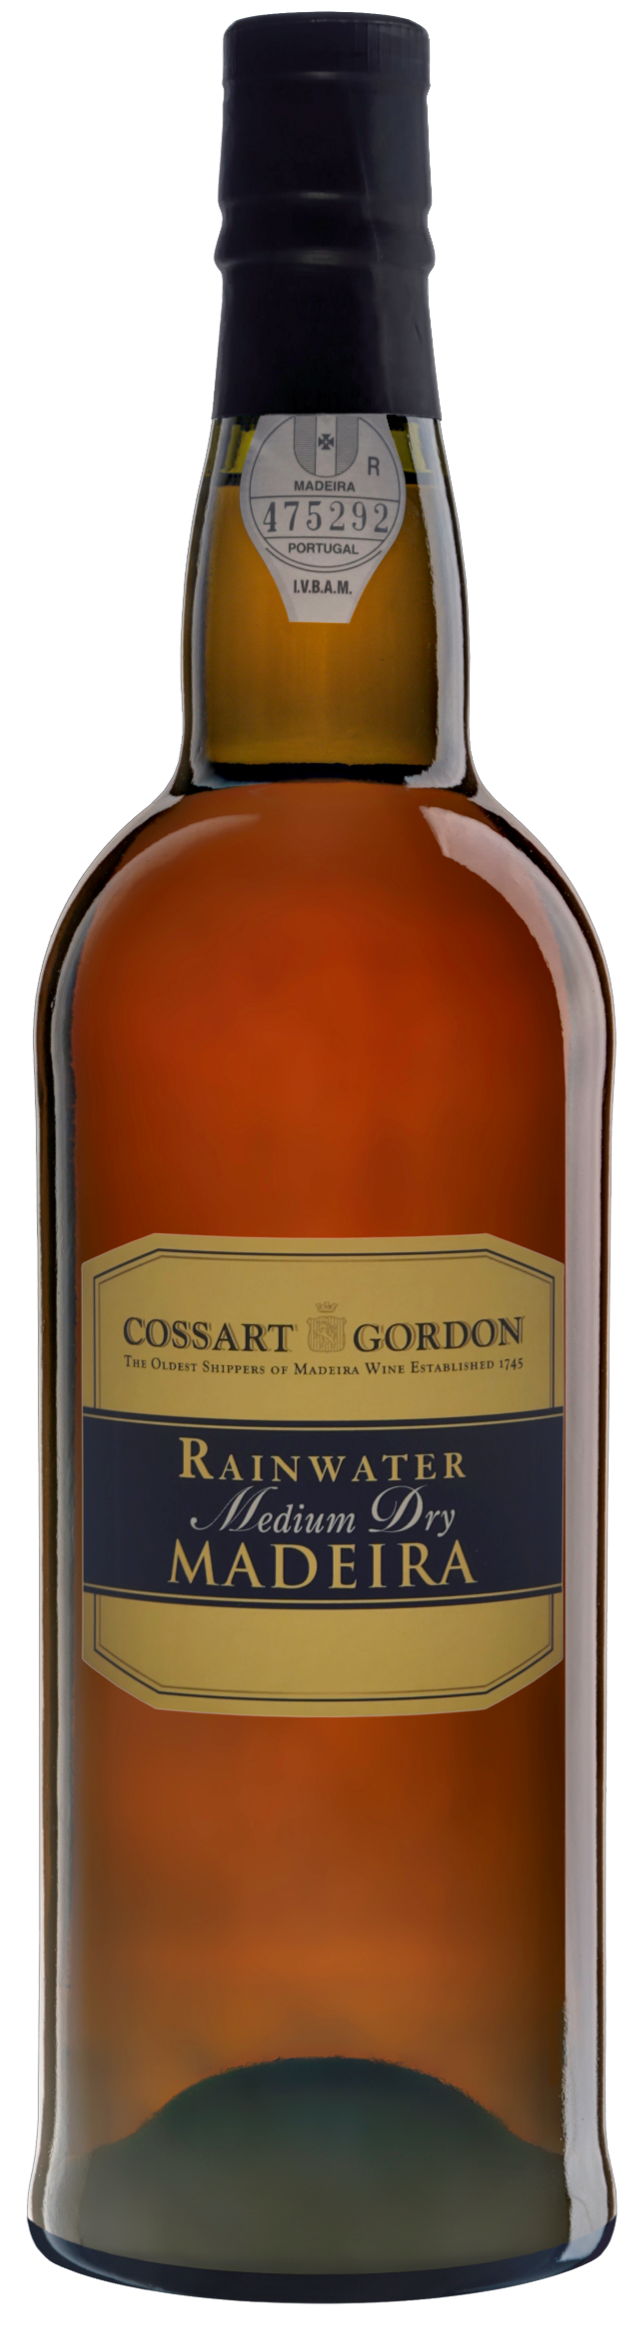 Cossart Gordon Rainwater Medium Dry Madeira<br>Madeira